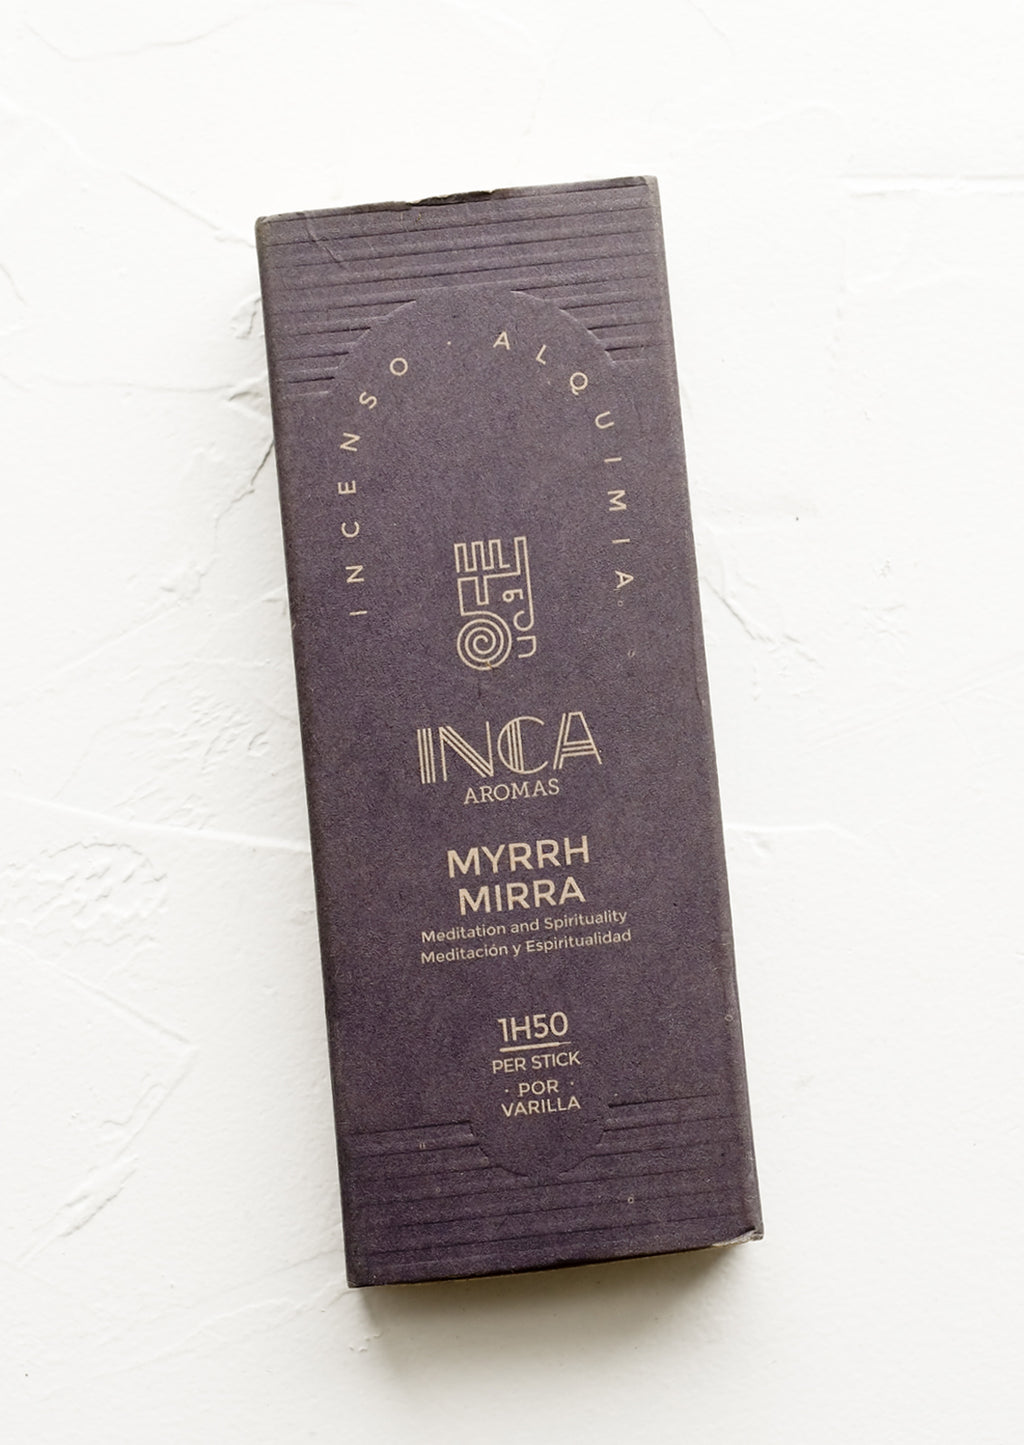 Myrrh: A box of myrrh stick incense.